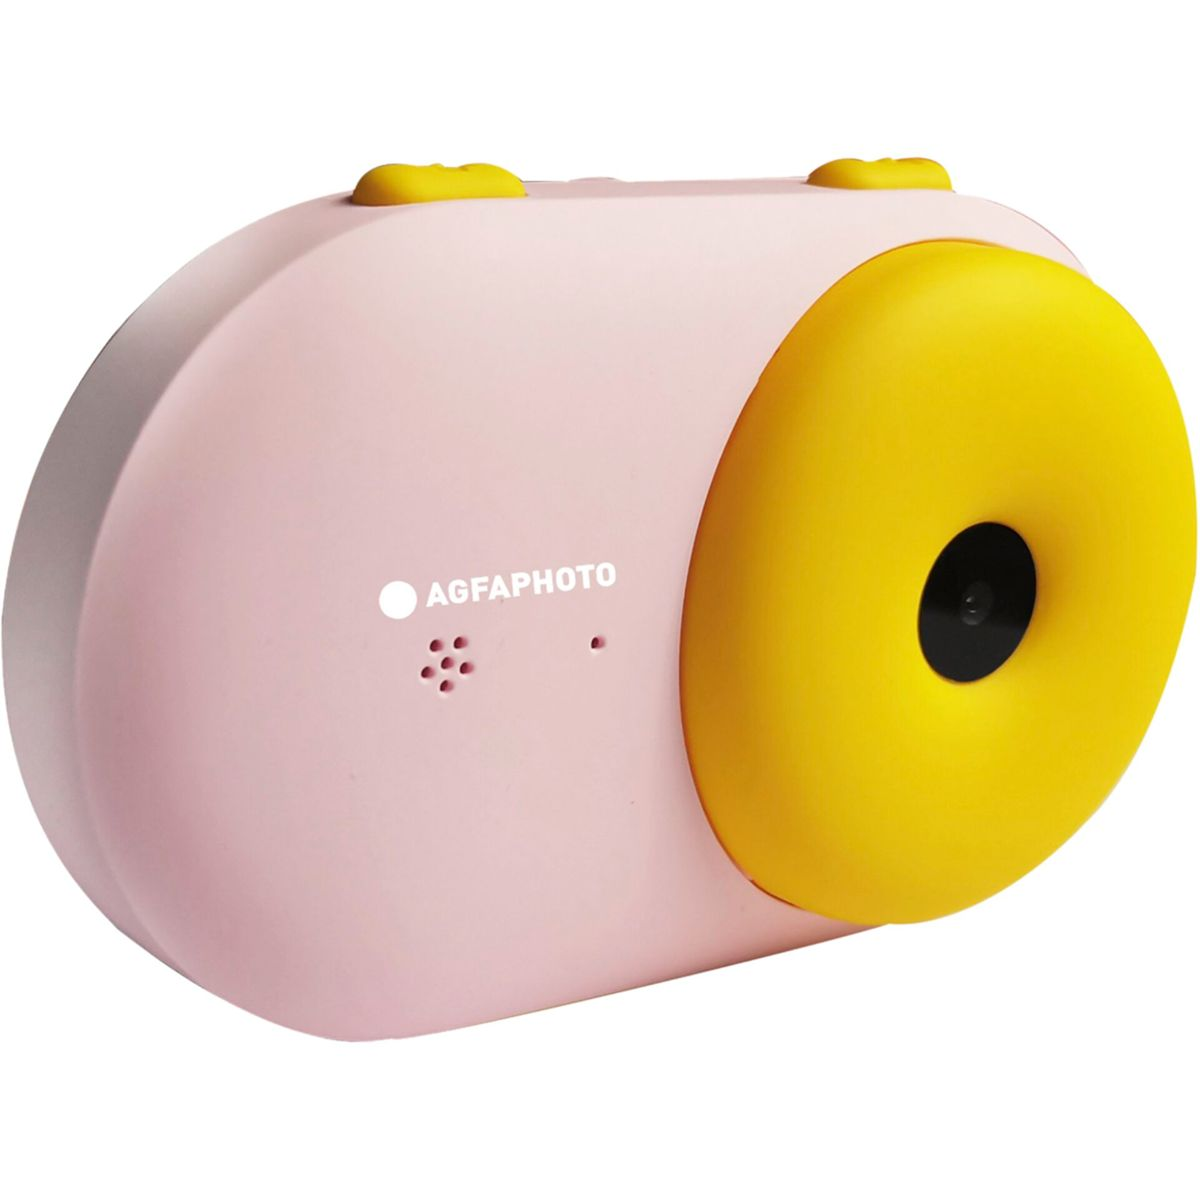 AGFAPHOTO Realikids Water pink pink- KinderkameraUnterwasserkamera Proof